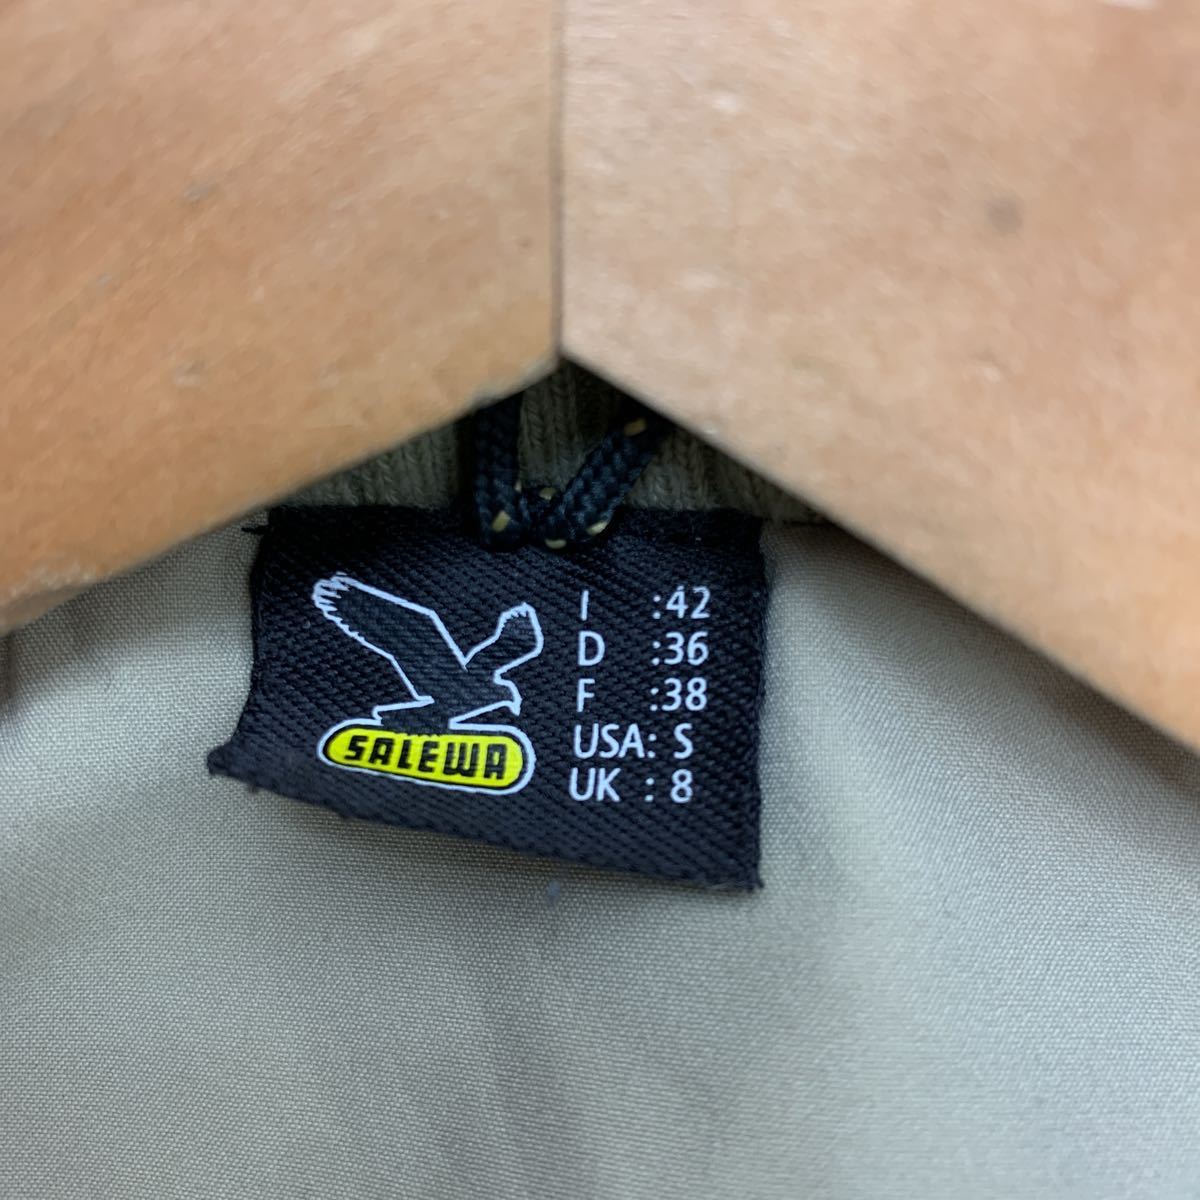 sarewaSALEWA beige cotton inside jacket lady's S size outdoor jacket EPITHELIUM PTX 2L W\'S JKT thin #FD132